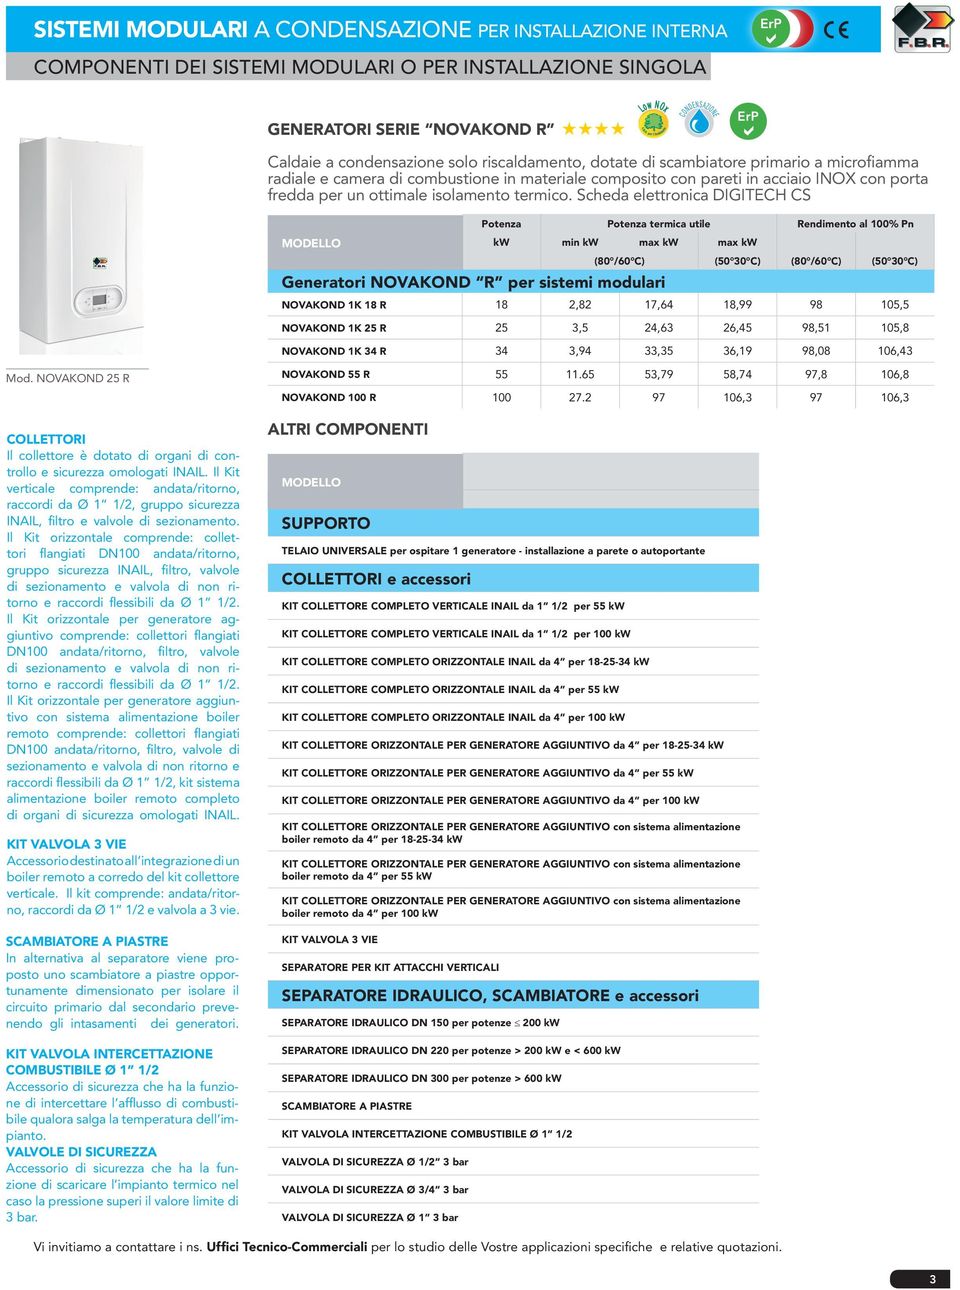 Sched elettronic DIGITECH CS MODELLO Potenz Potenz termic utile Rendimento l 100% Pn kw min kw mx kw mx kw Genertori NOVAKOND R per sistemi modulri (80 /60 C) (50 30 C) (80 /60 C) (50 30 C) NOVAKOND